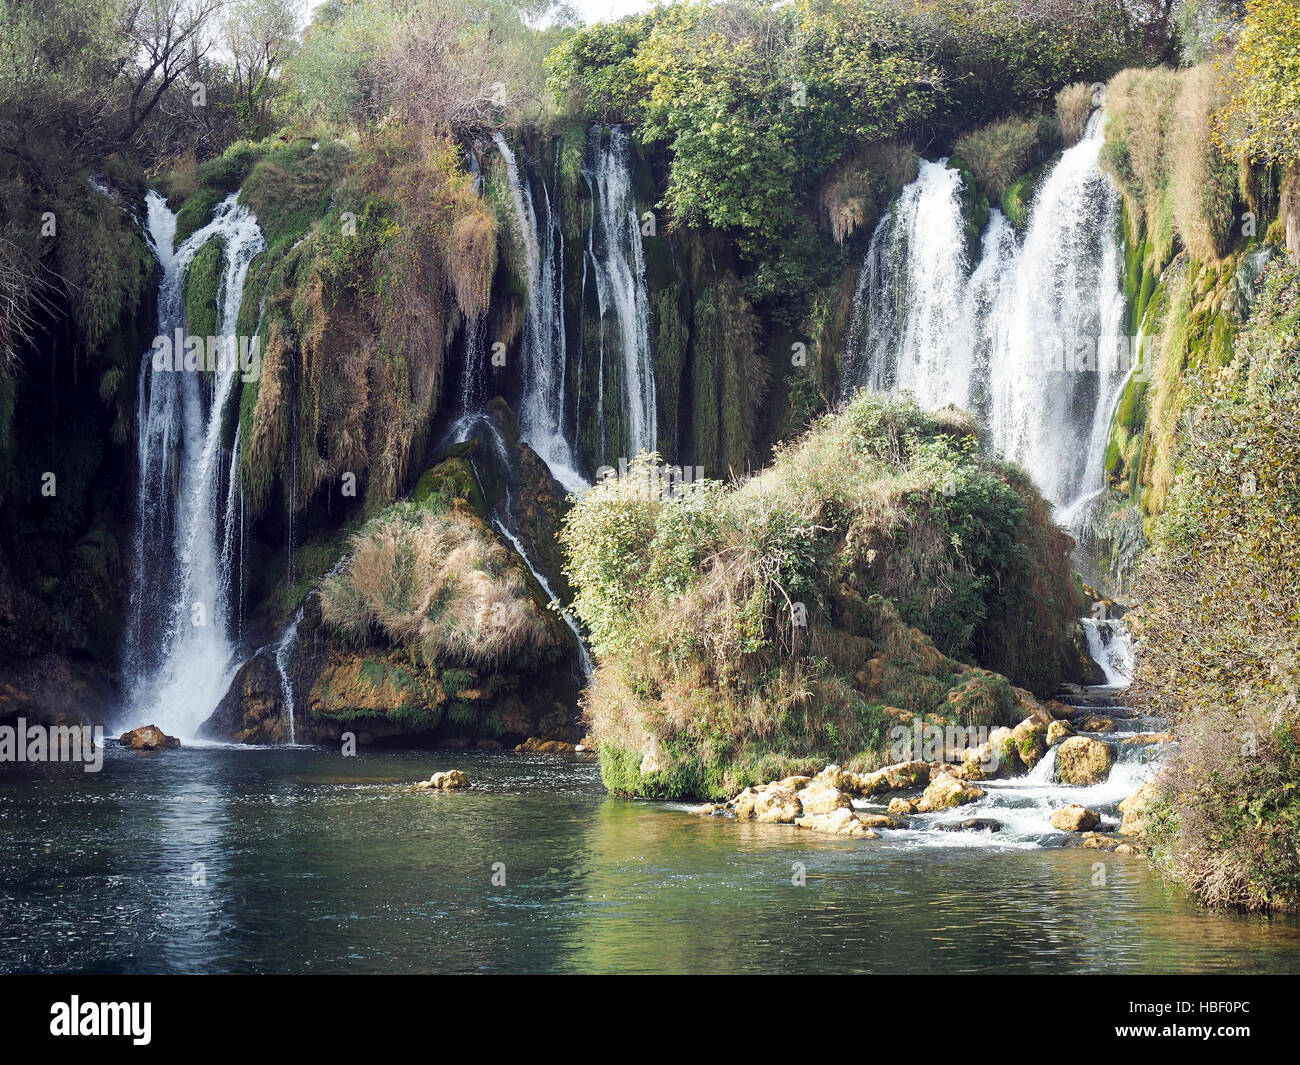 Kravica waterfall on the Trebizat River, Ljubuski, Bosnia and Herzegovina. Stock Photo